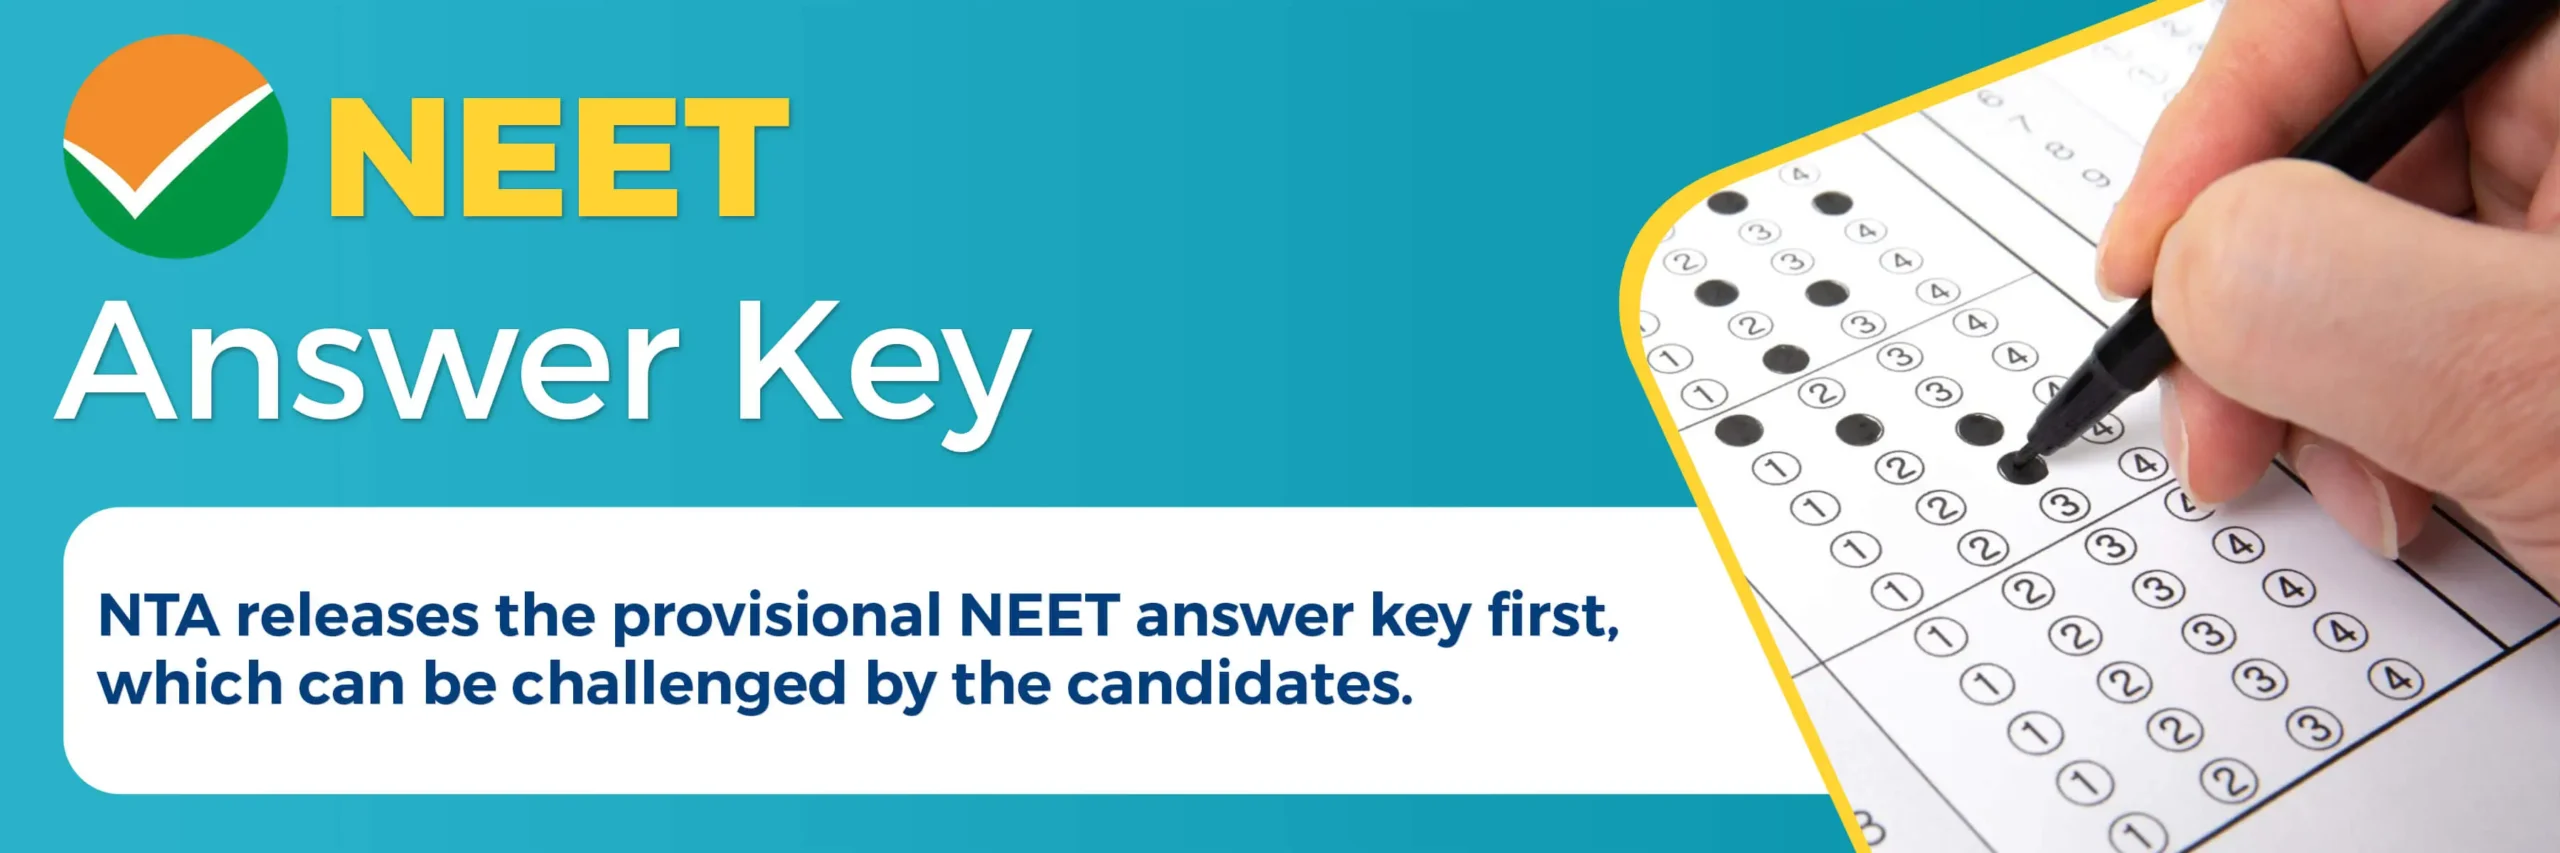 neet-answer-key